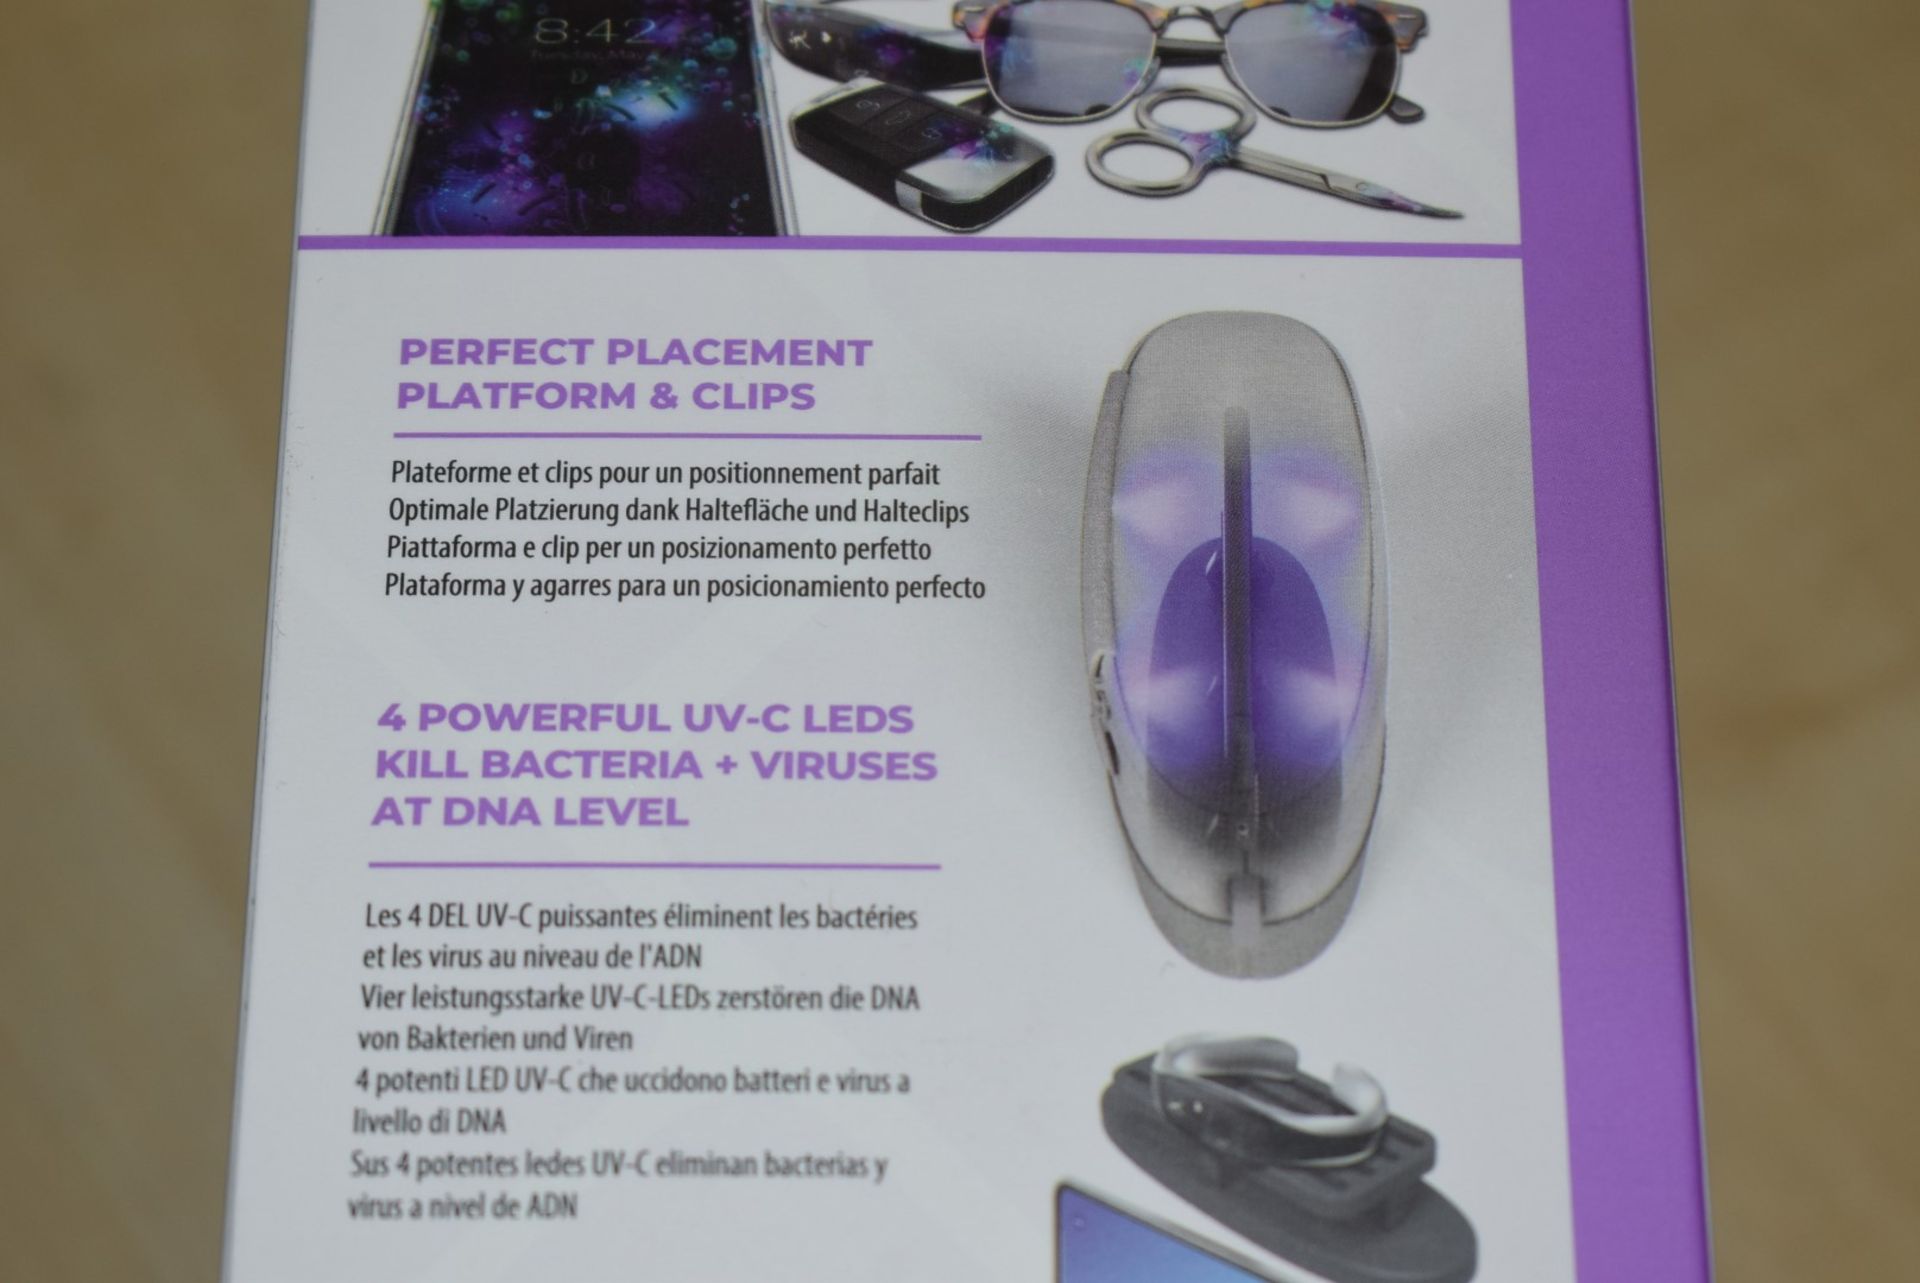 4 x Homedics UV Clean Portable Sanitiser Bags - Kills Upto 99.9% of Bacteria & Viruses in Just 60 - Image 4 of 19